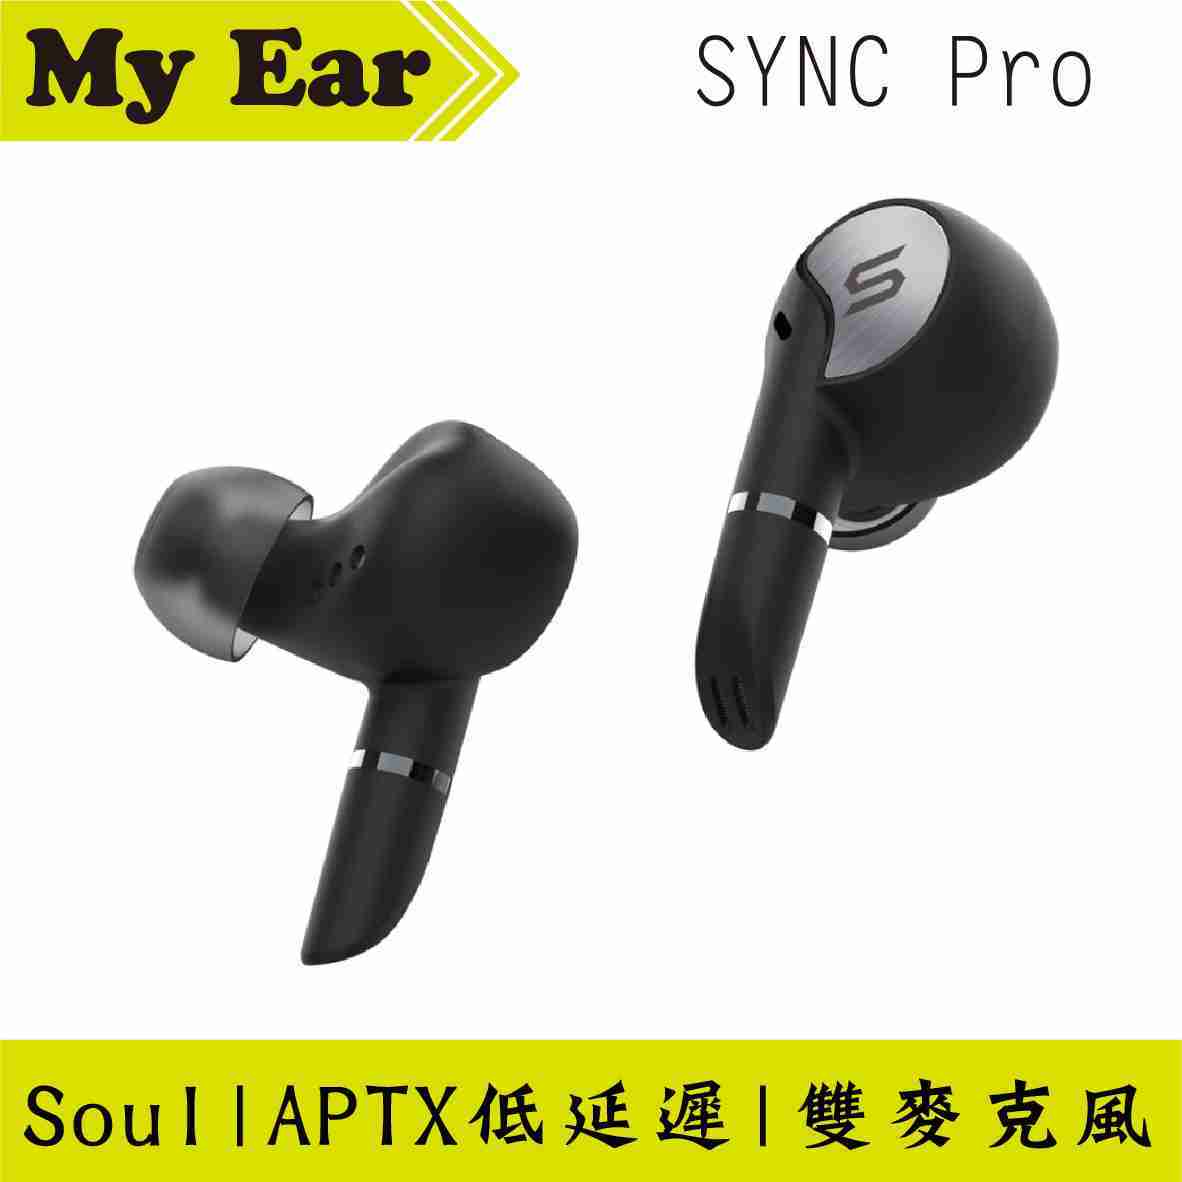 Soul SYNC Pro 雙Mic降噪 真無線藍芽耳機 | My Ear耳機專門店